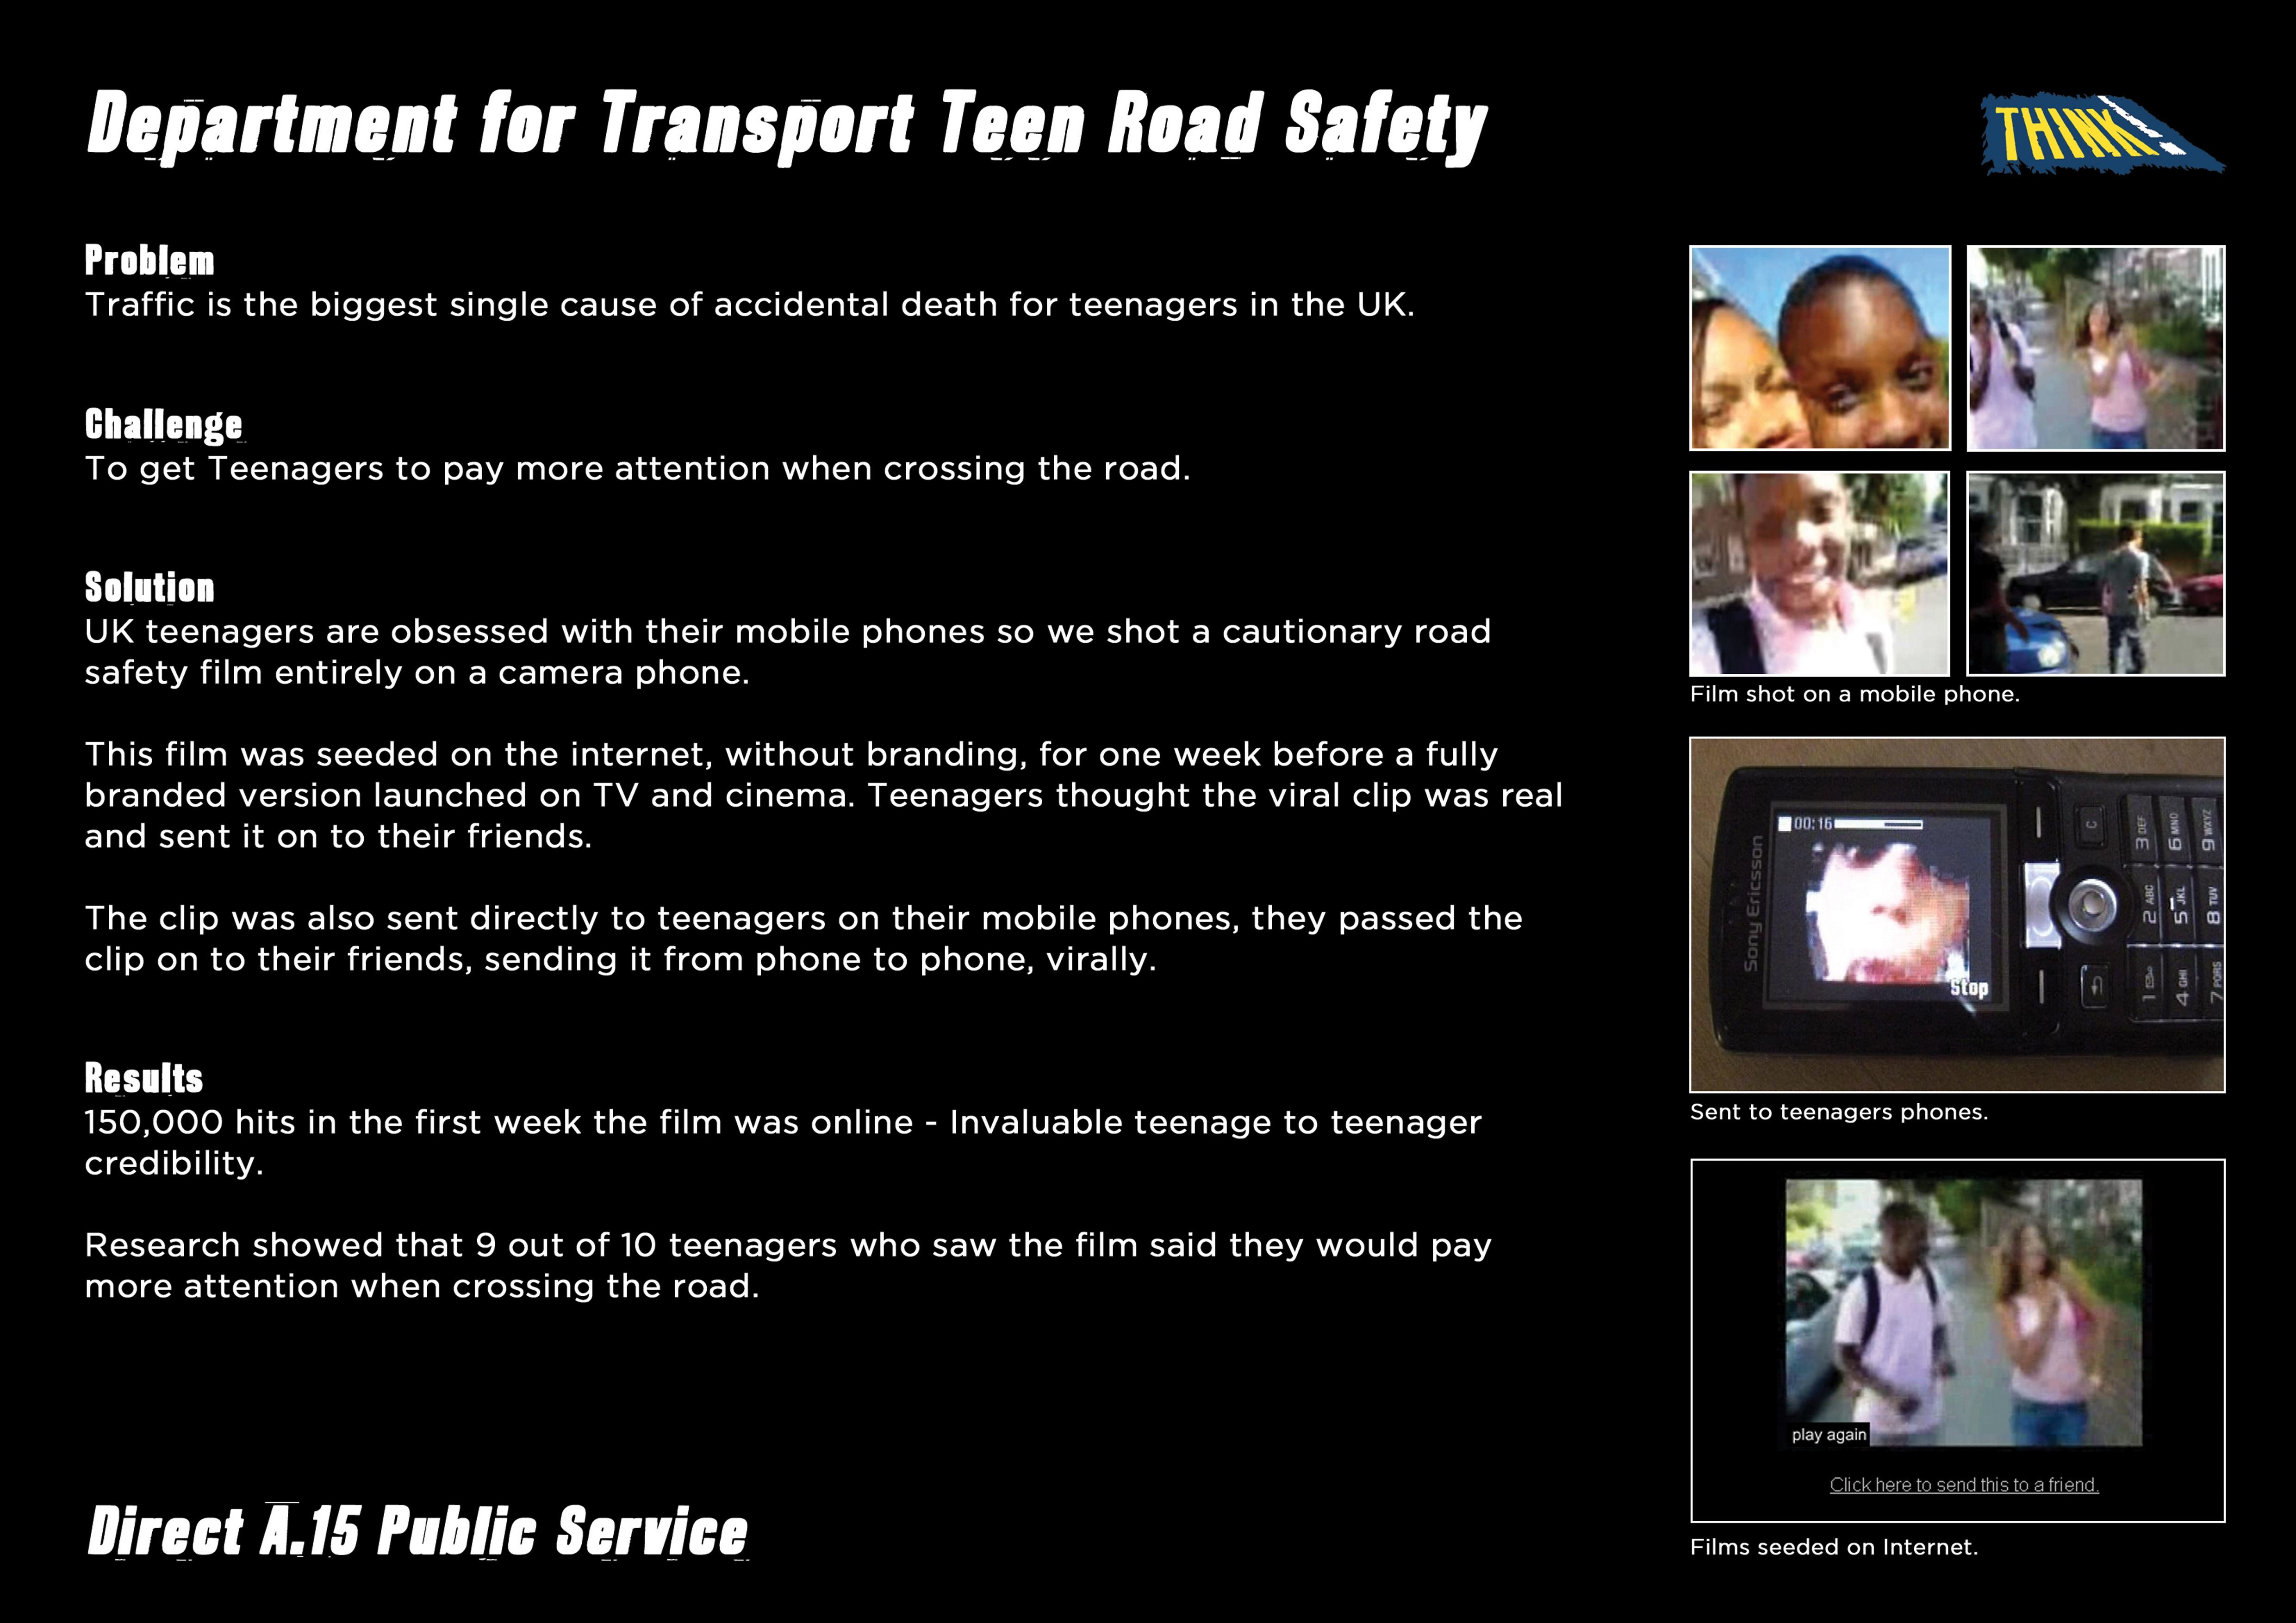 TEENAGE ROAD SAFETY